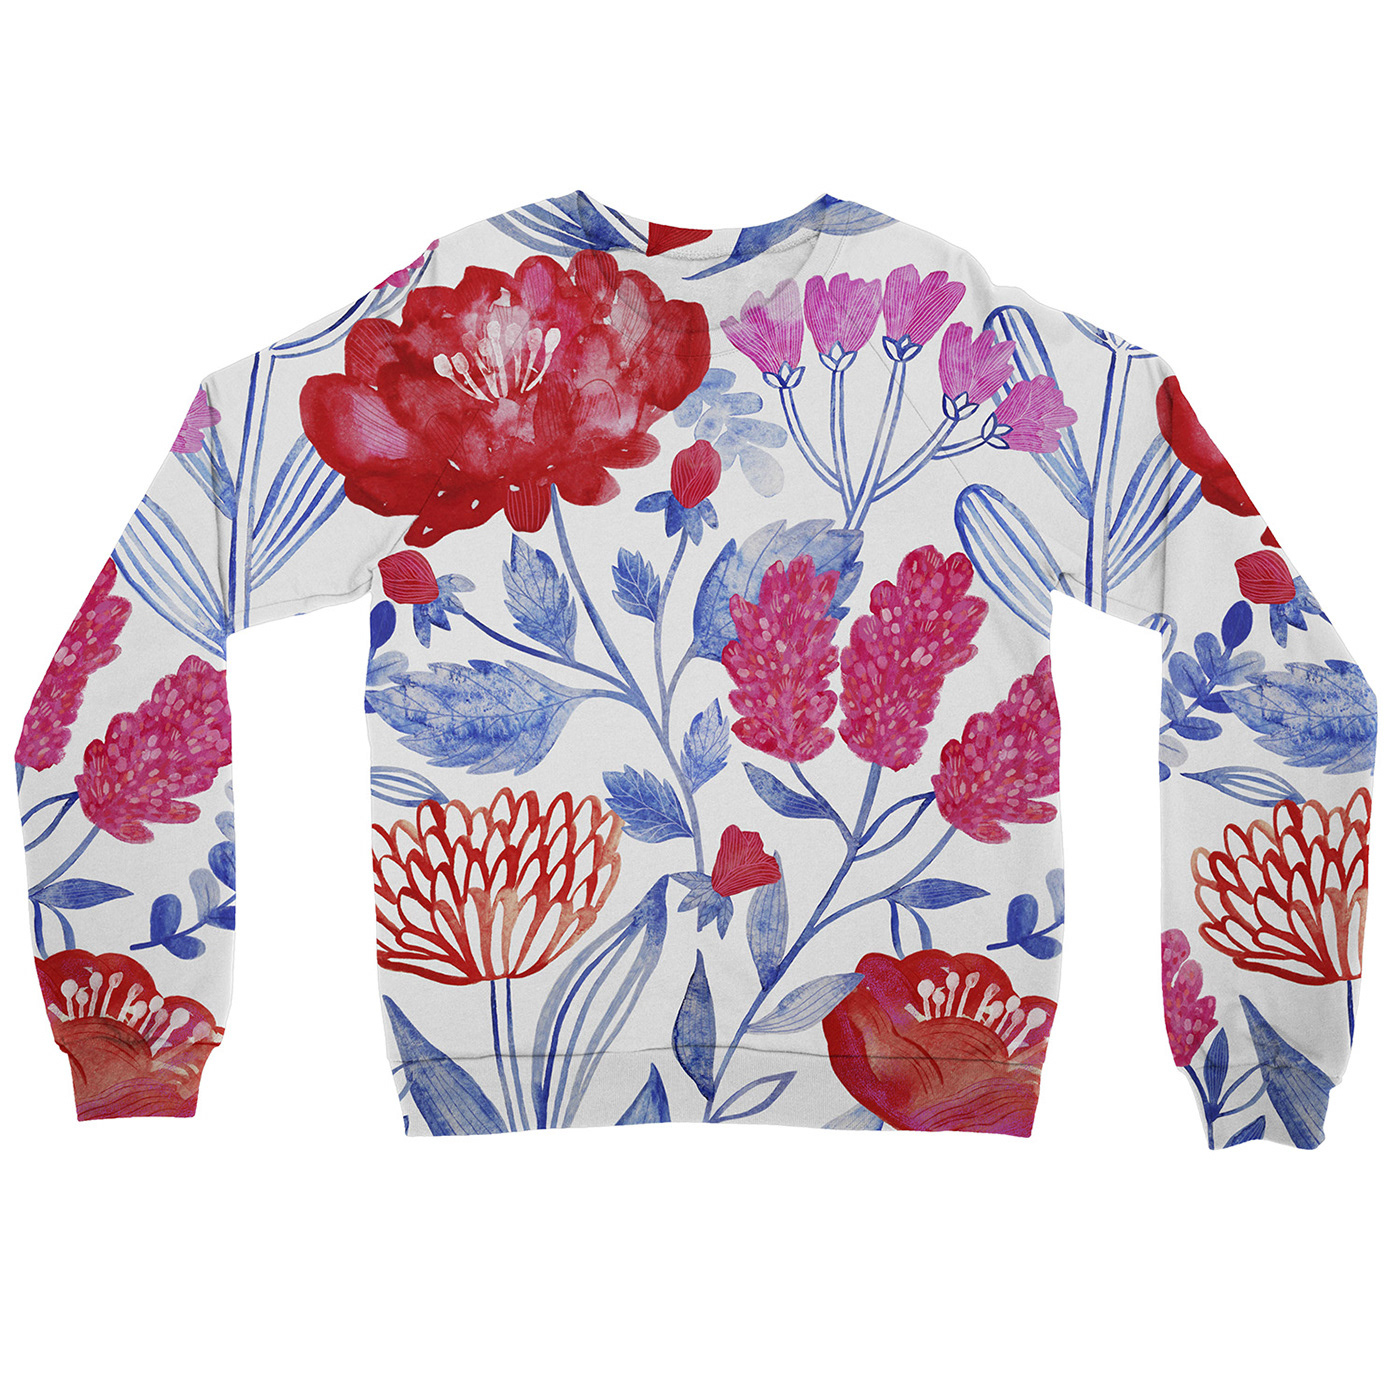 flower watercolor Nature pattern textile fabric textile design  Surface Pattern floral botanical